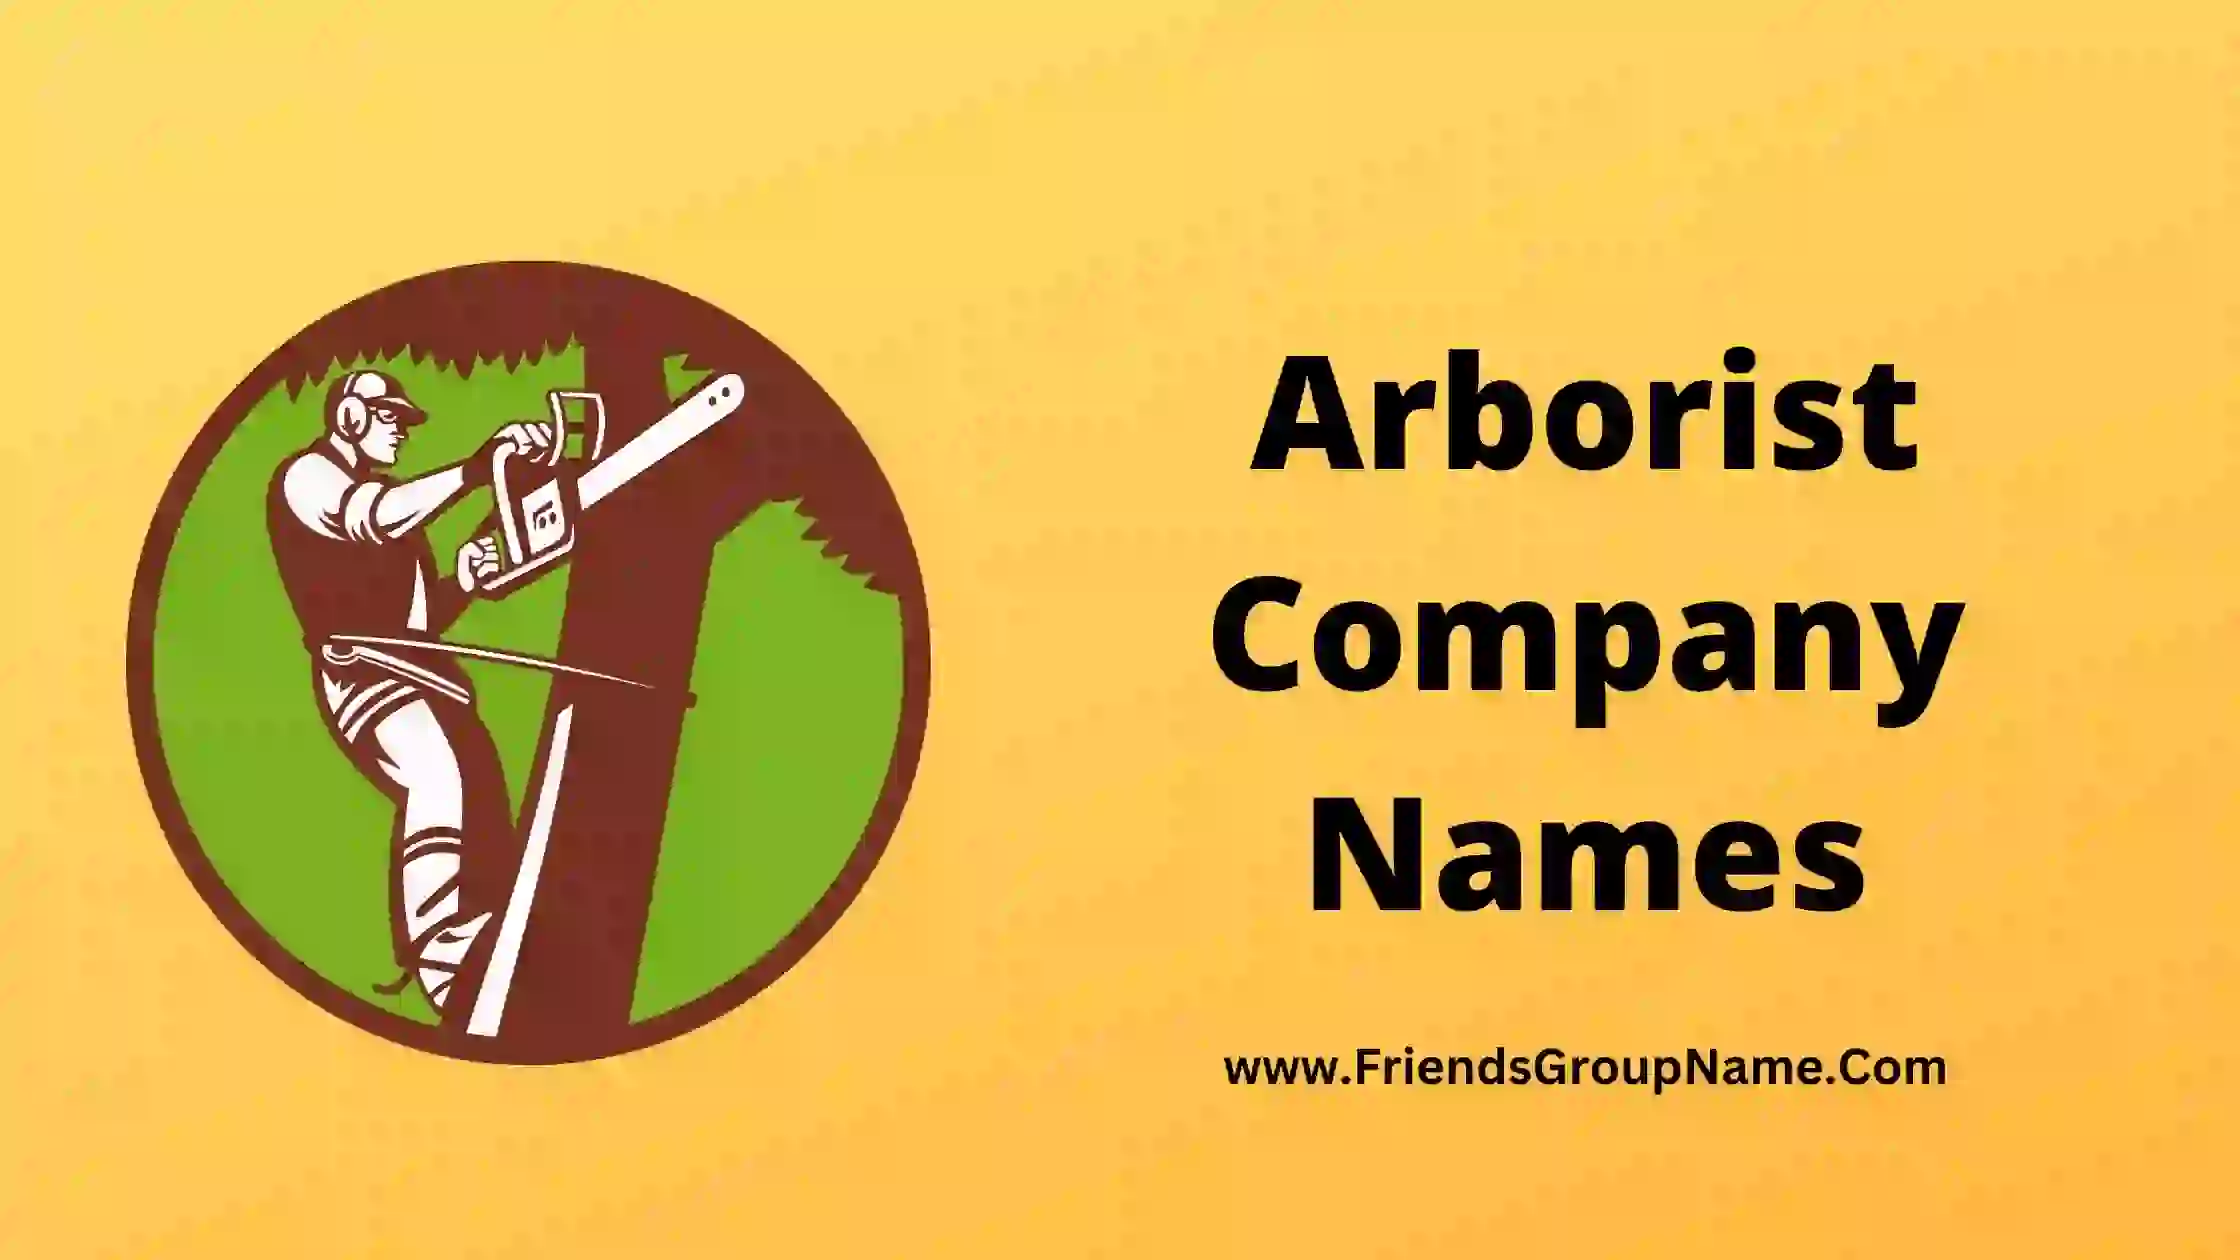 Arborist Company Names